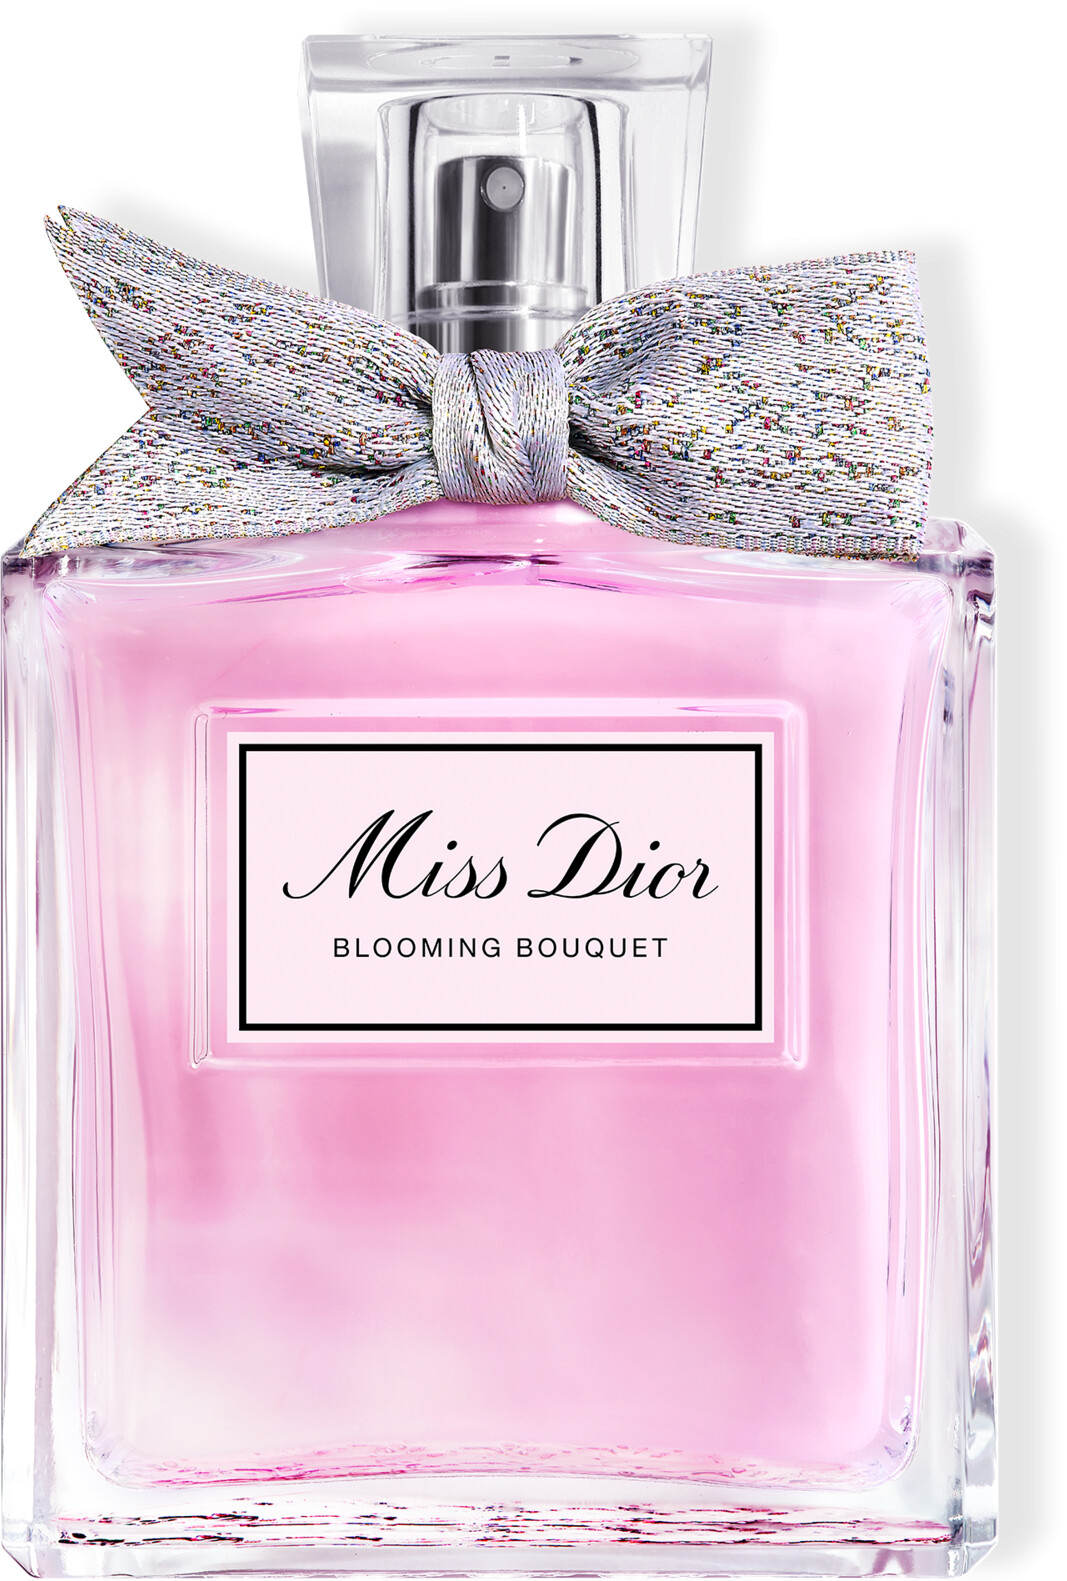 DIOR Miss Dior Blooming Bouquet Eau de Toilette Spray 150ml